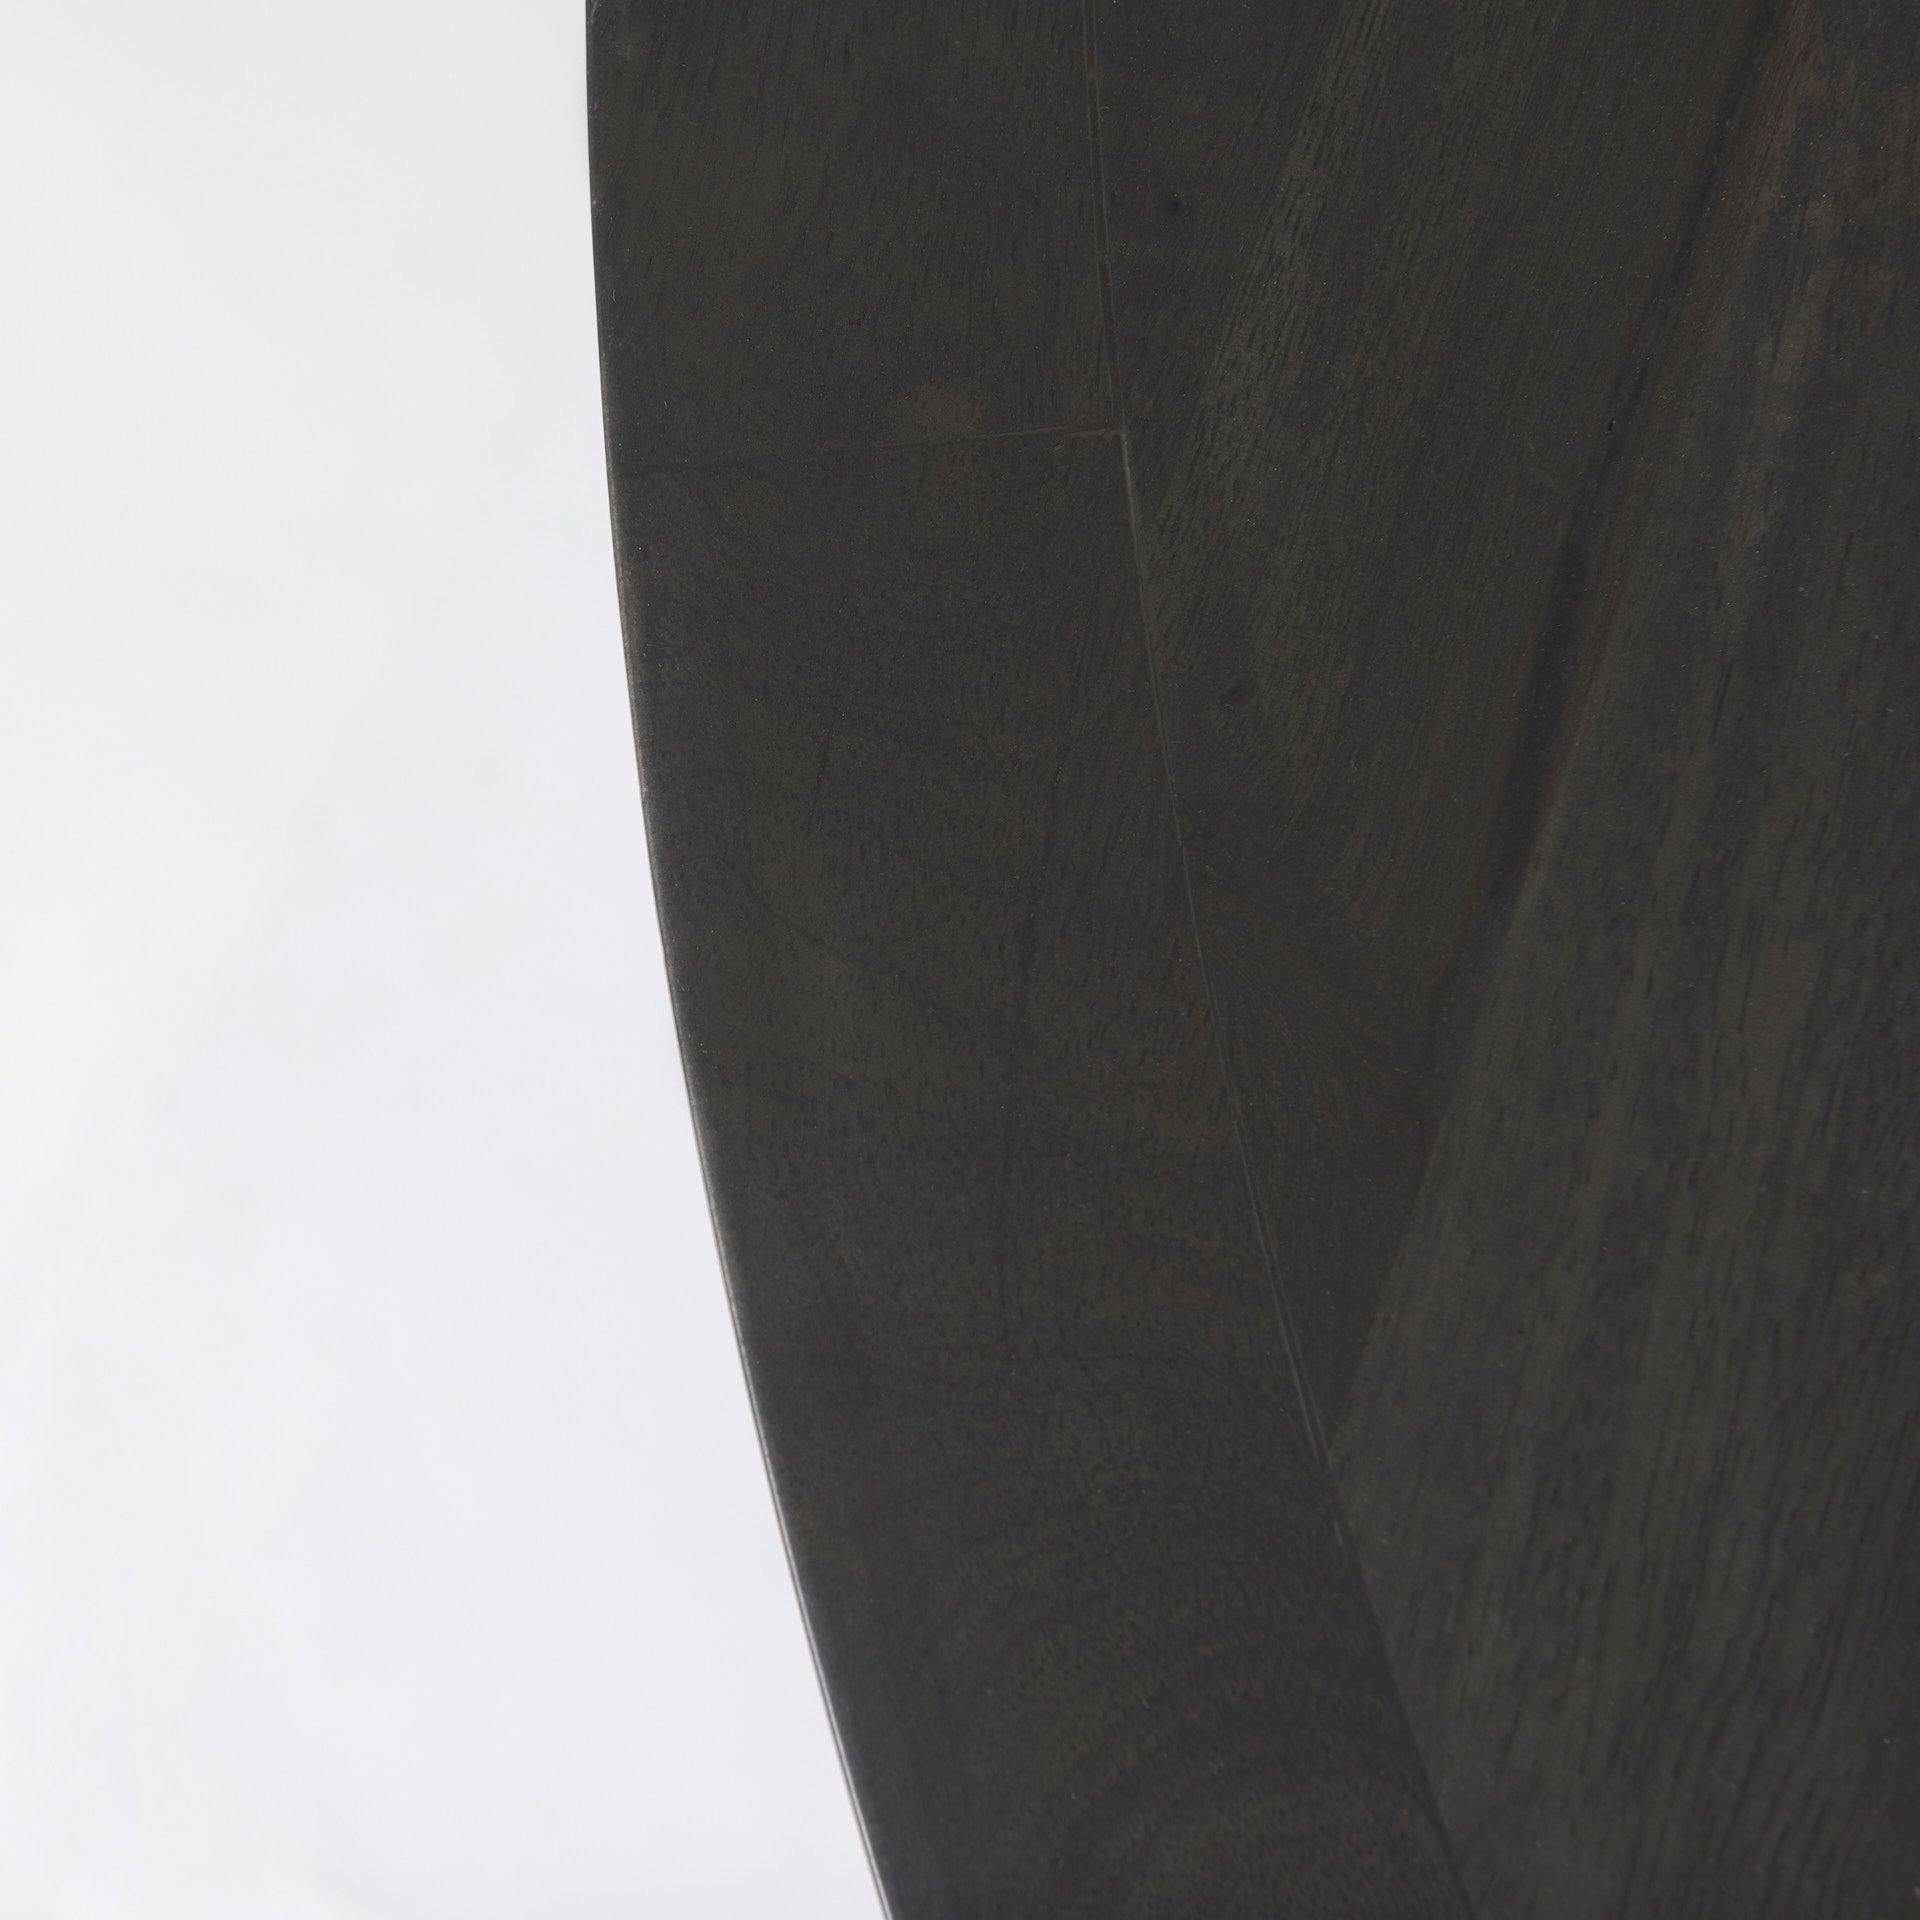 Liesl Black Mango Wood Dining Table - Reimagine Designs - dining table, new